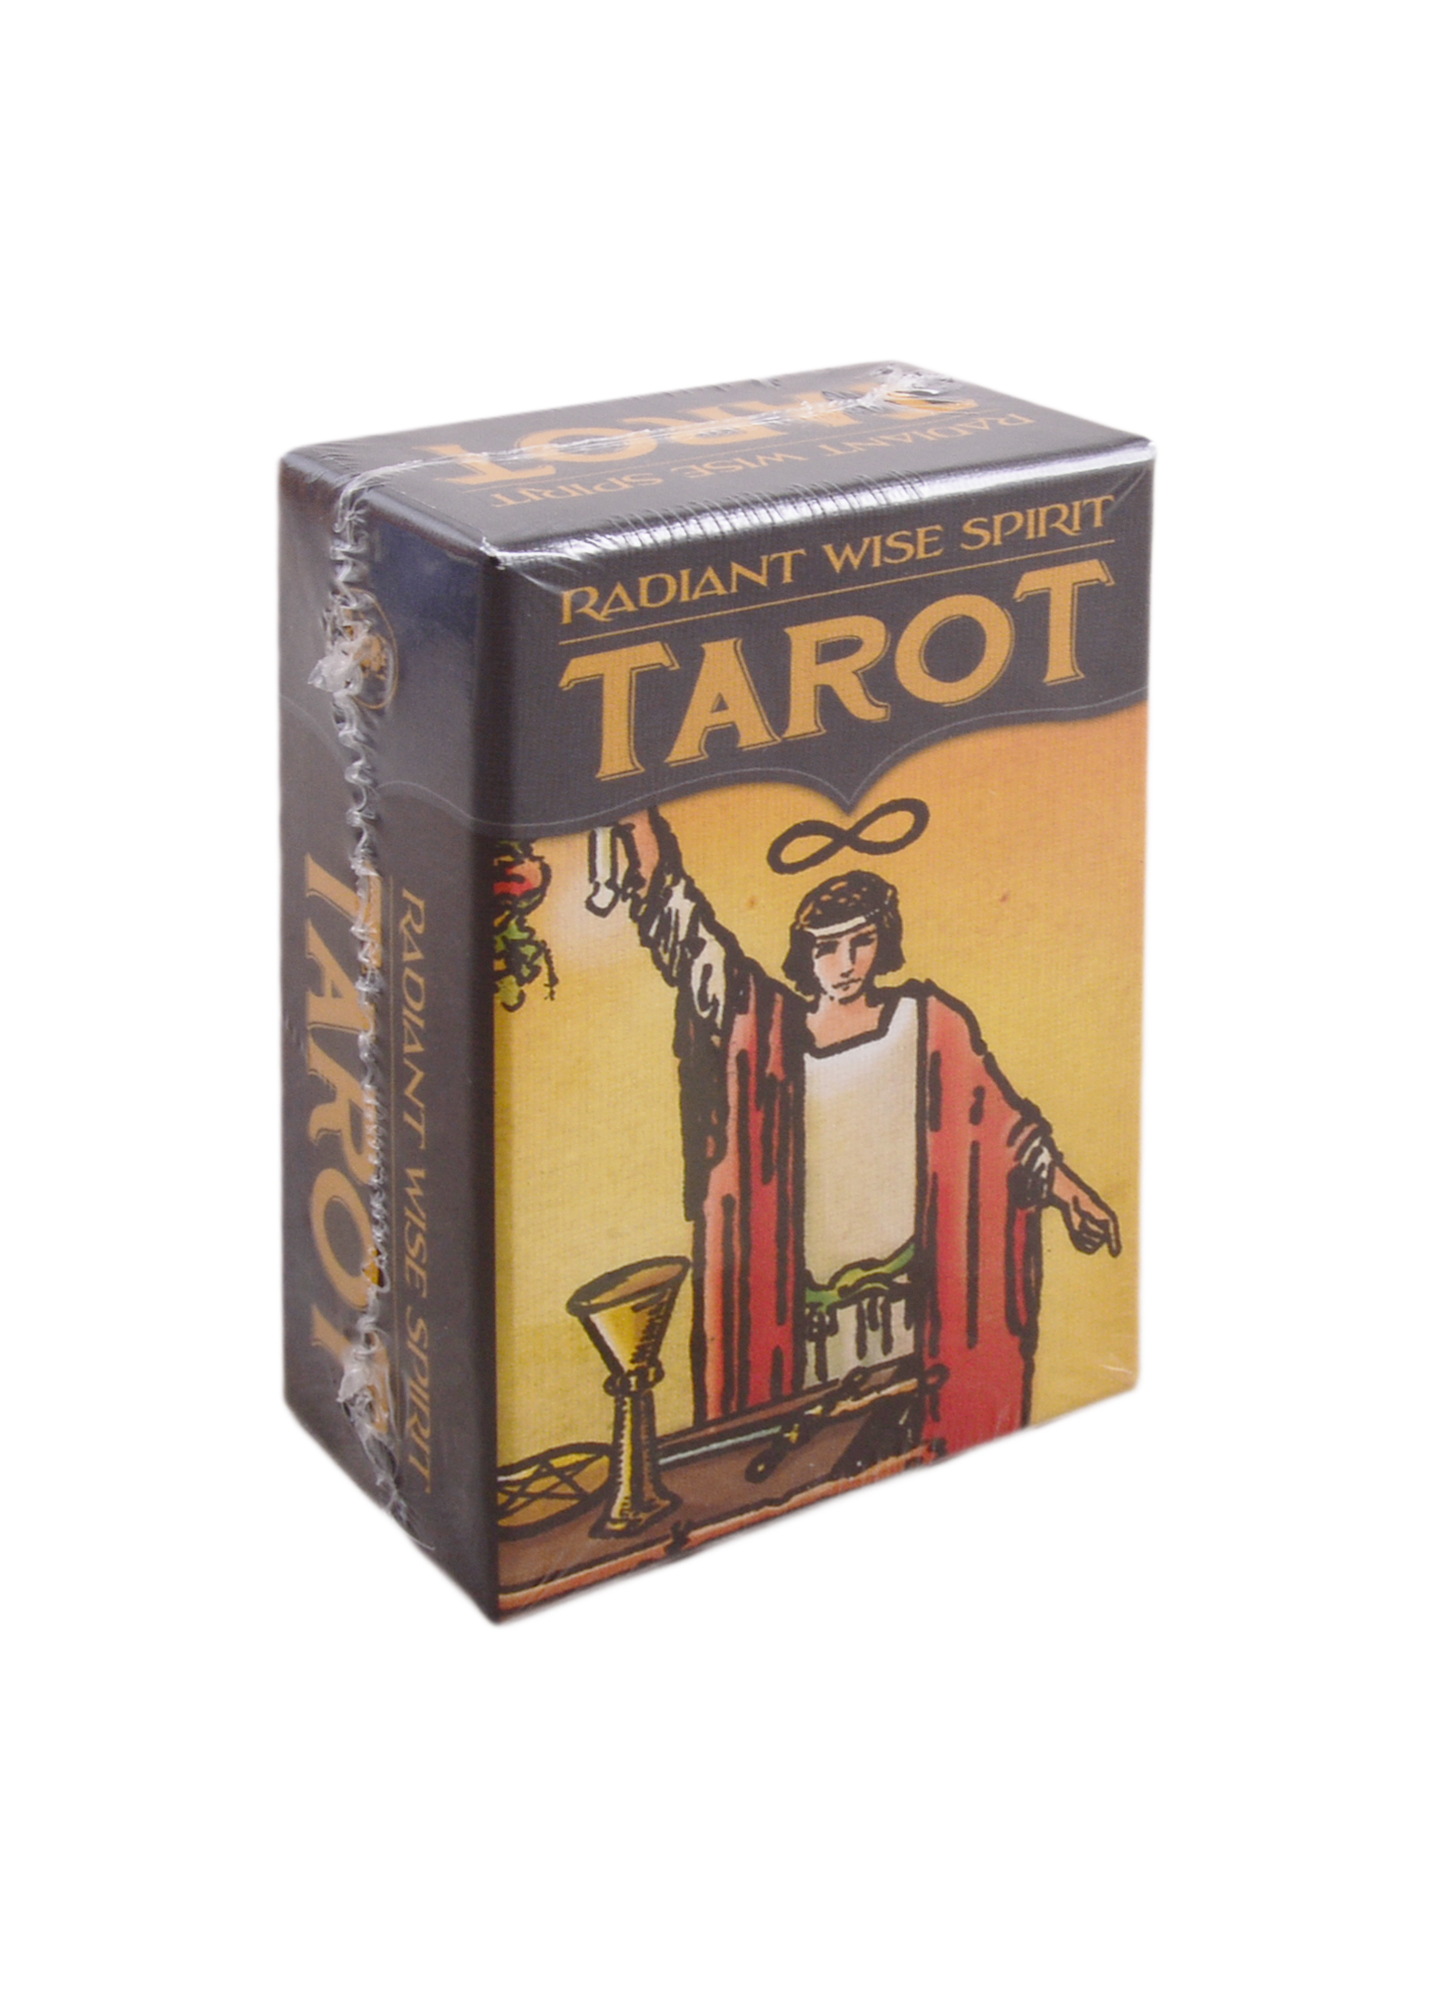 cullinane mj wise dog tarot Radiant Wise Spirit Tarot